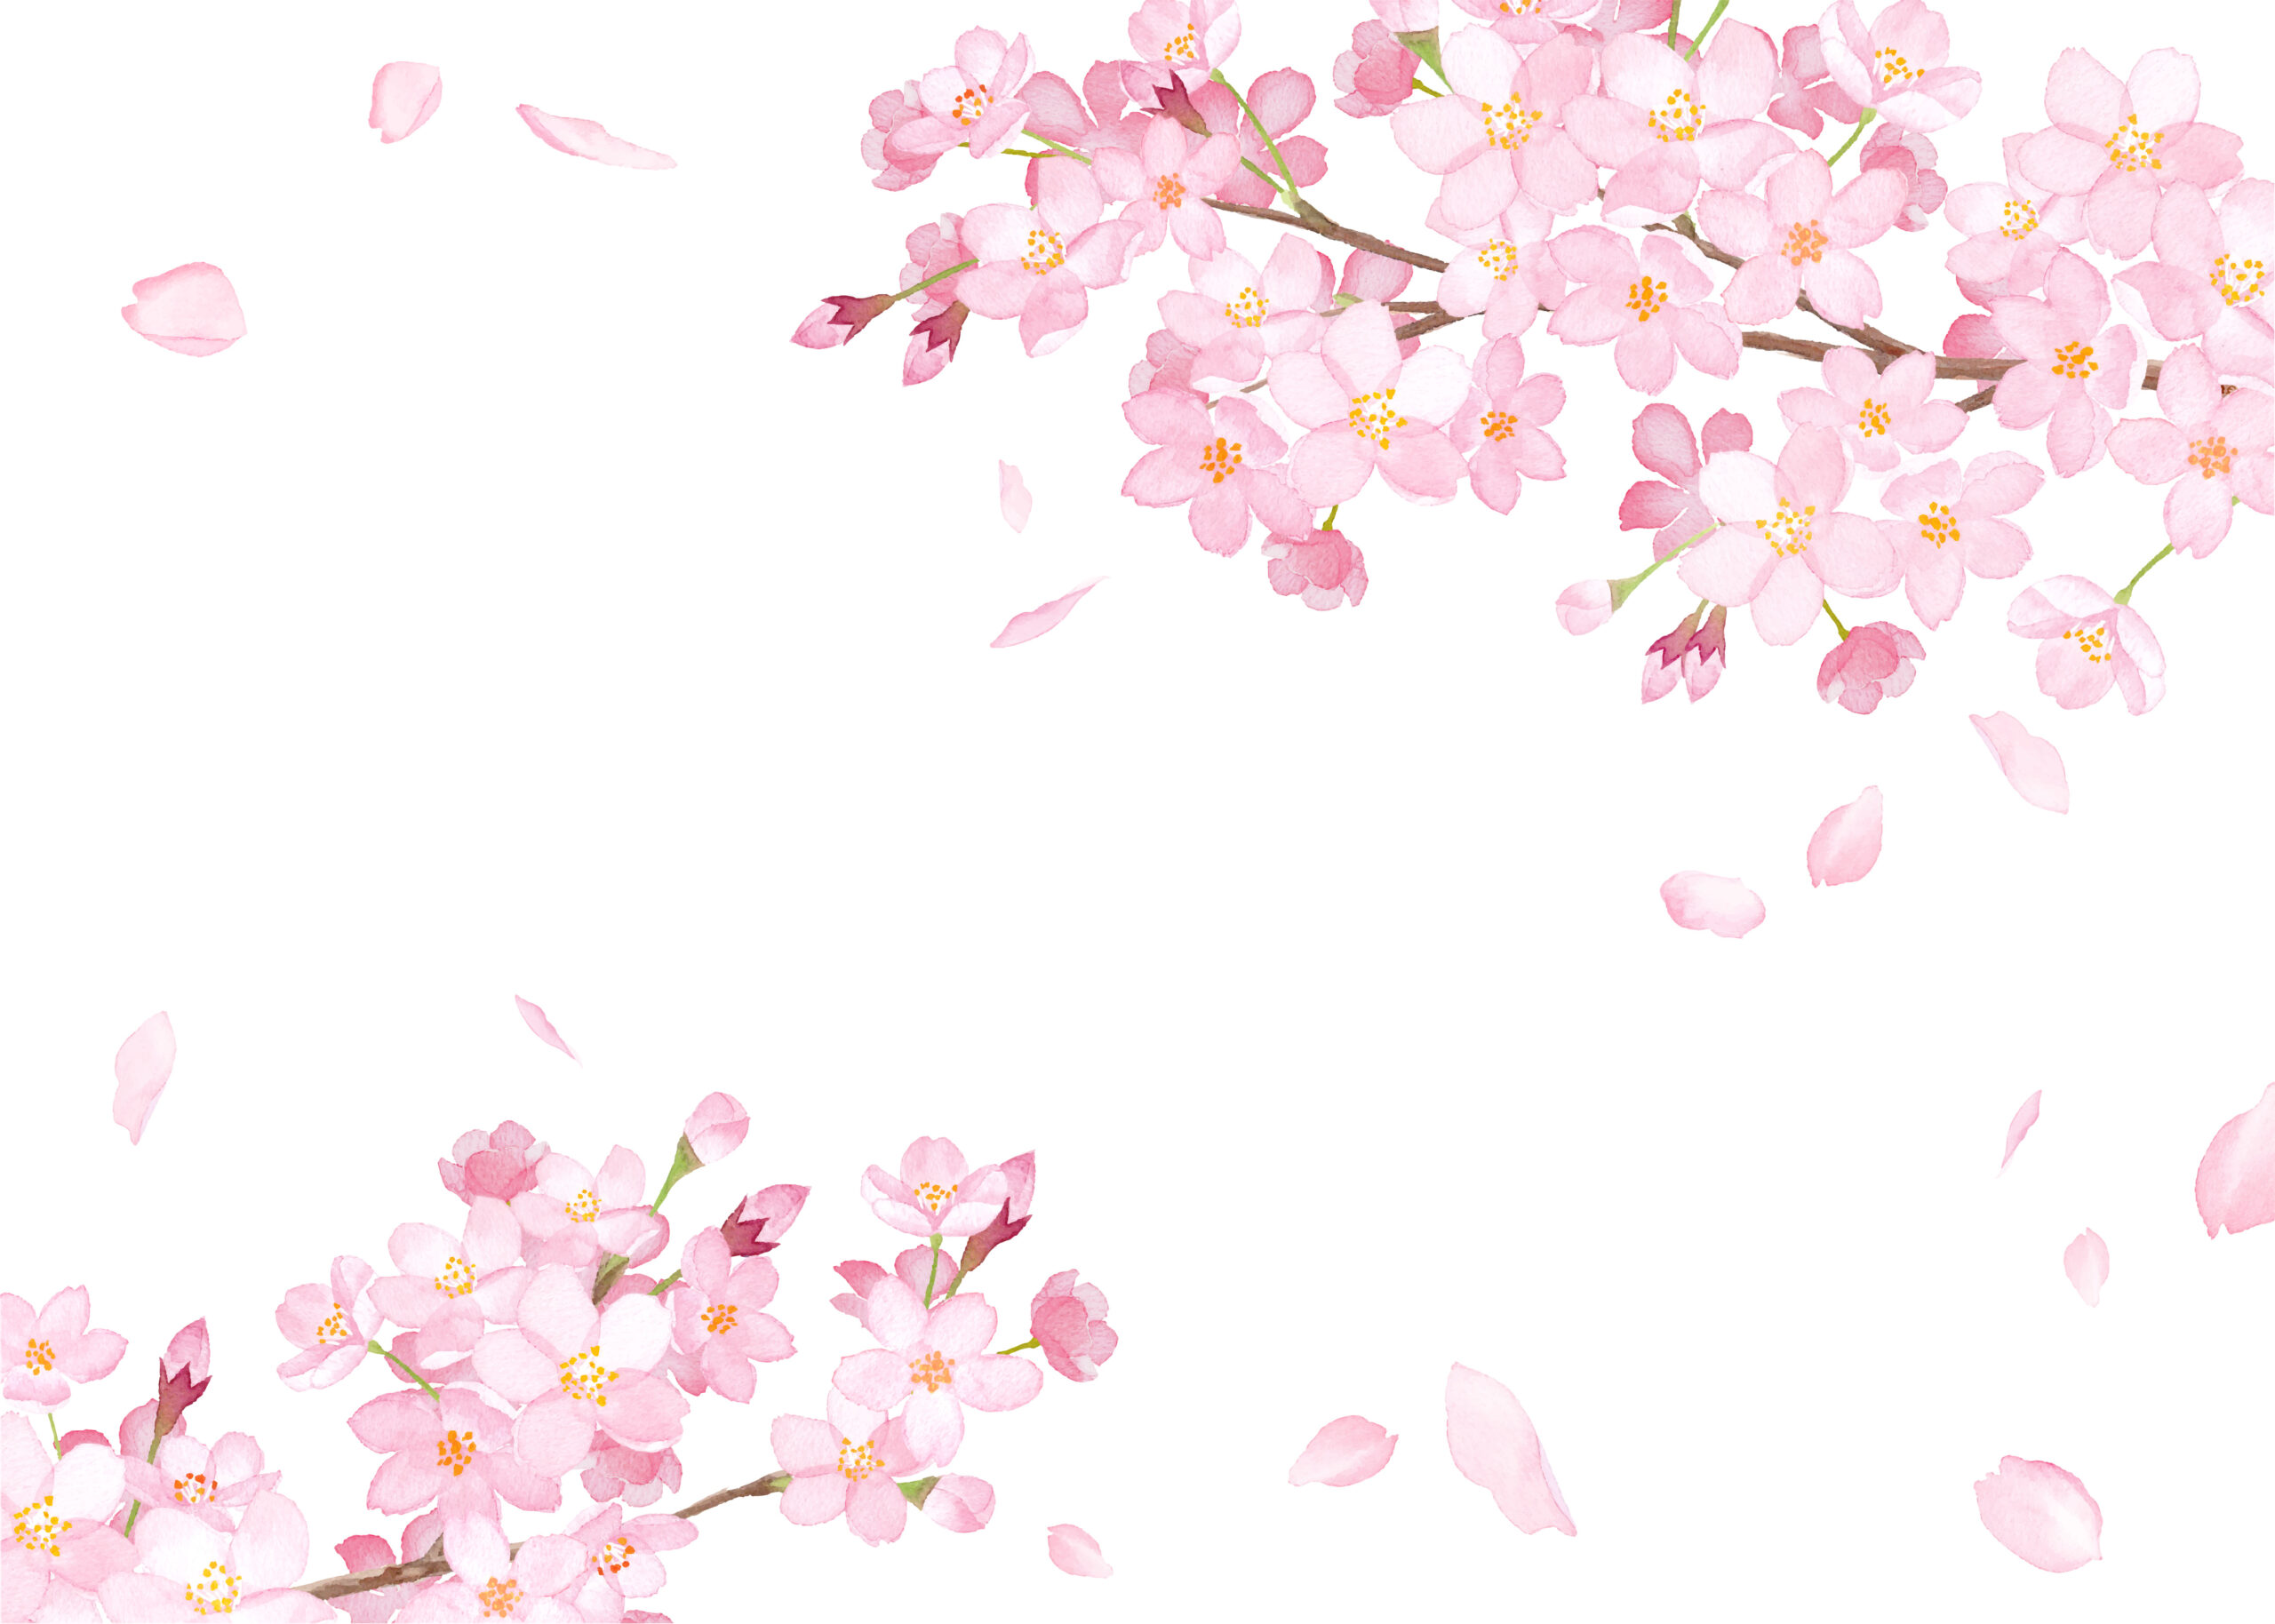 Pink flowers in spring